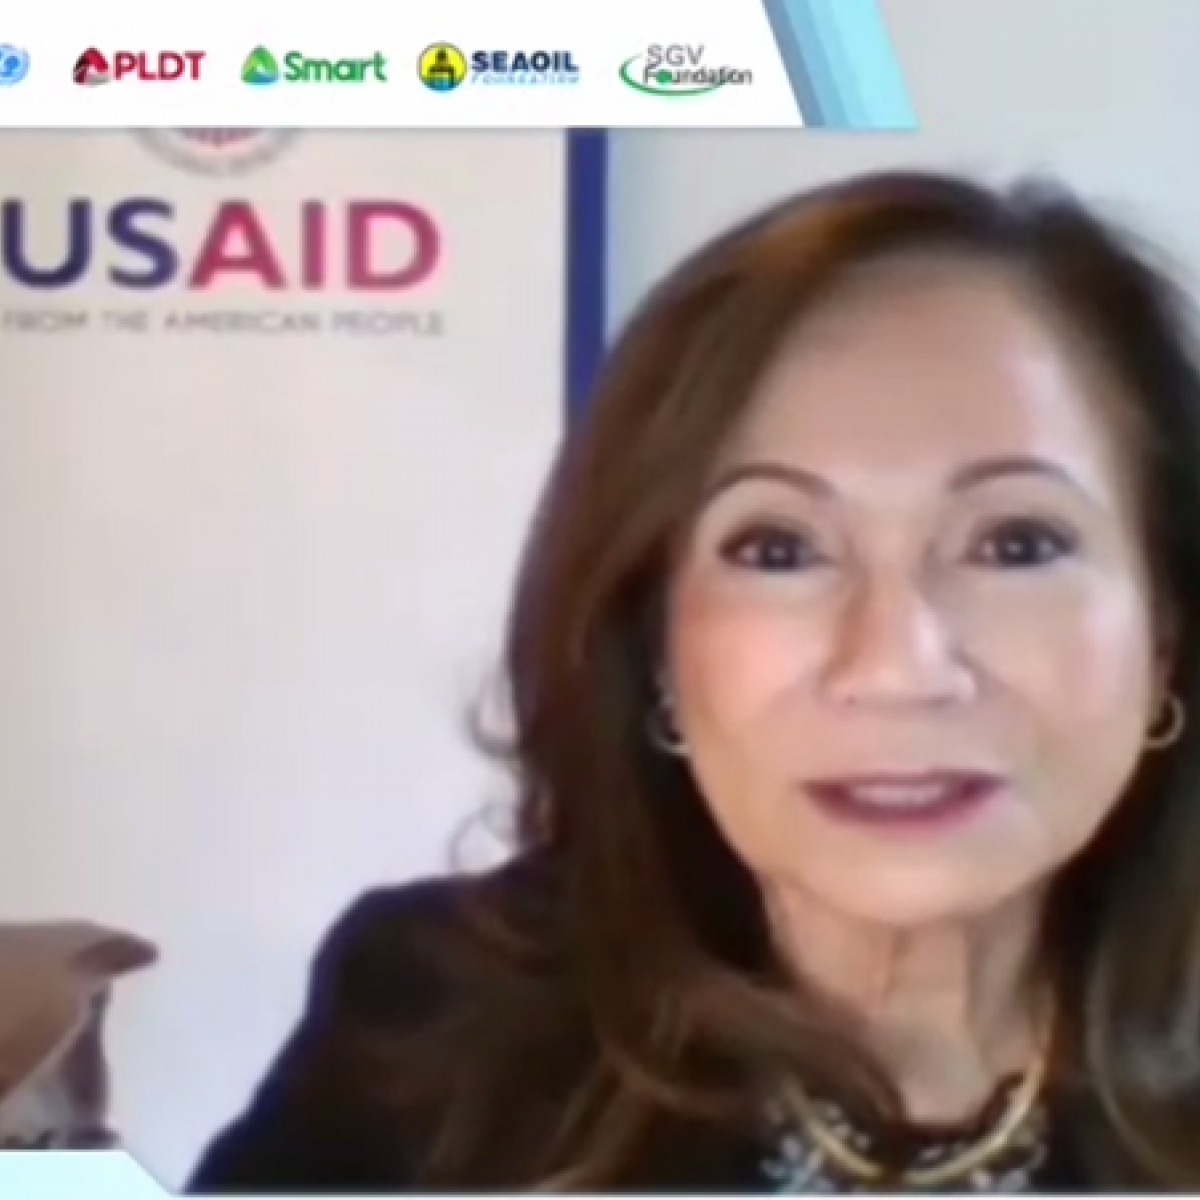 USAID Acting Administrator Lauds 3 Million Filipino Students Reached through U.S.-Philippine Partnership